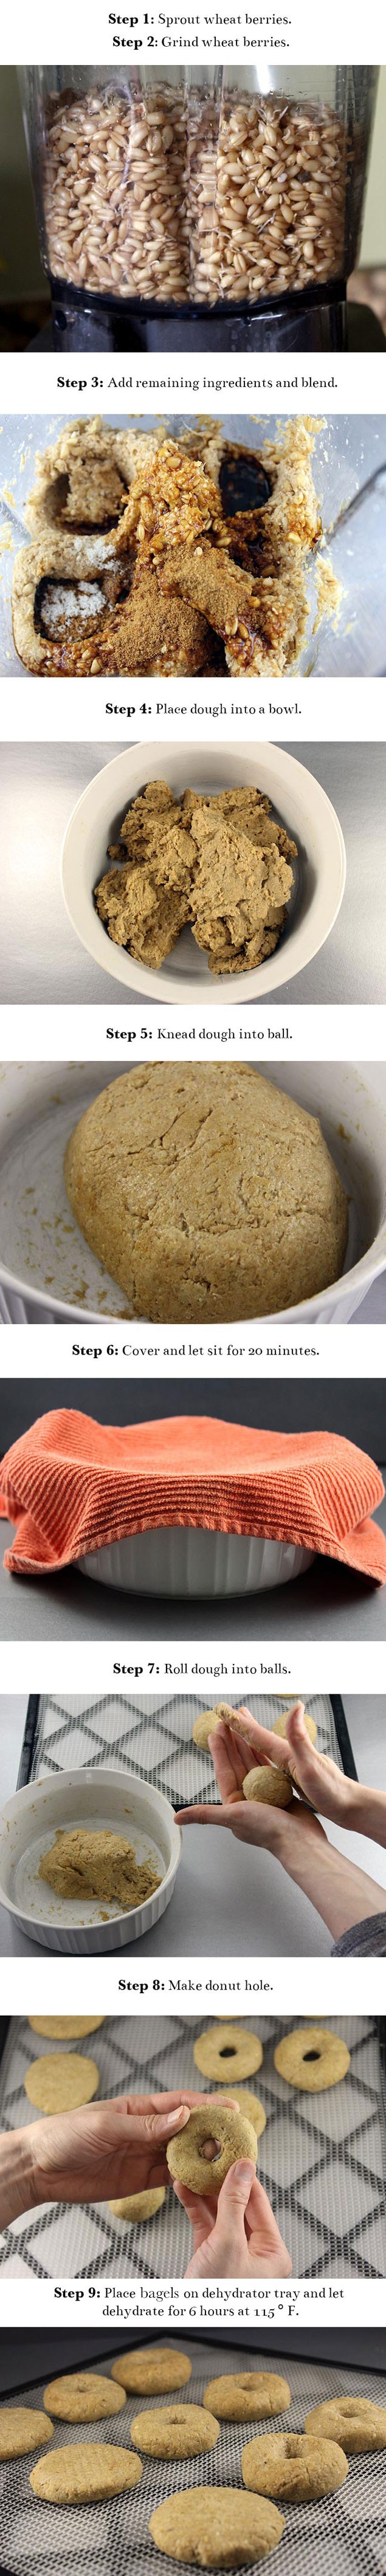 How to make raw vegan bagels